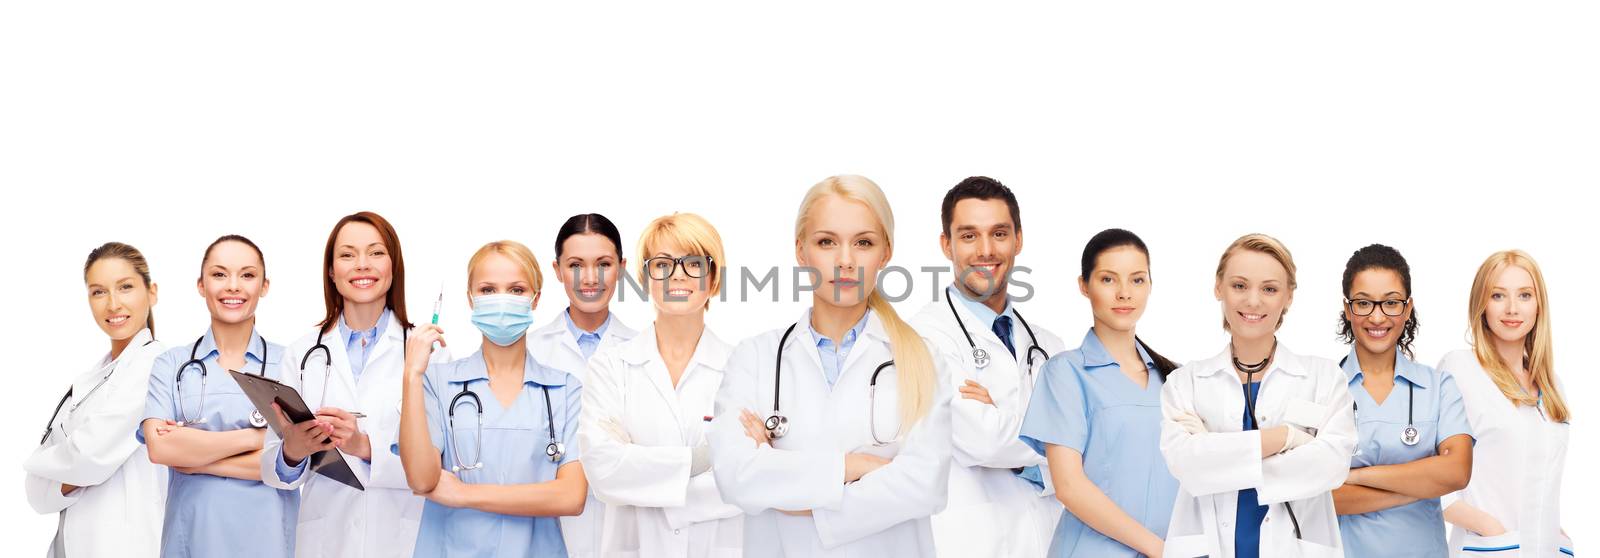 team or group of doctors and nurses by dolgachov